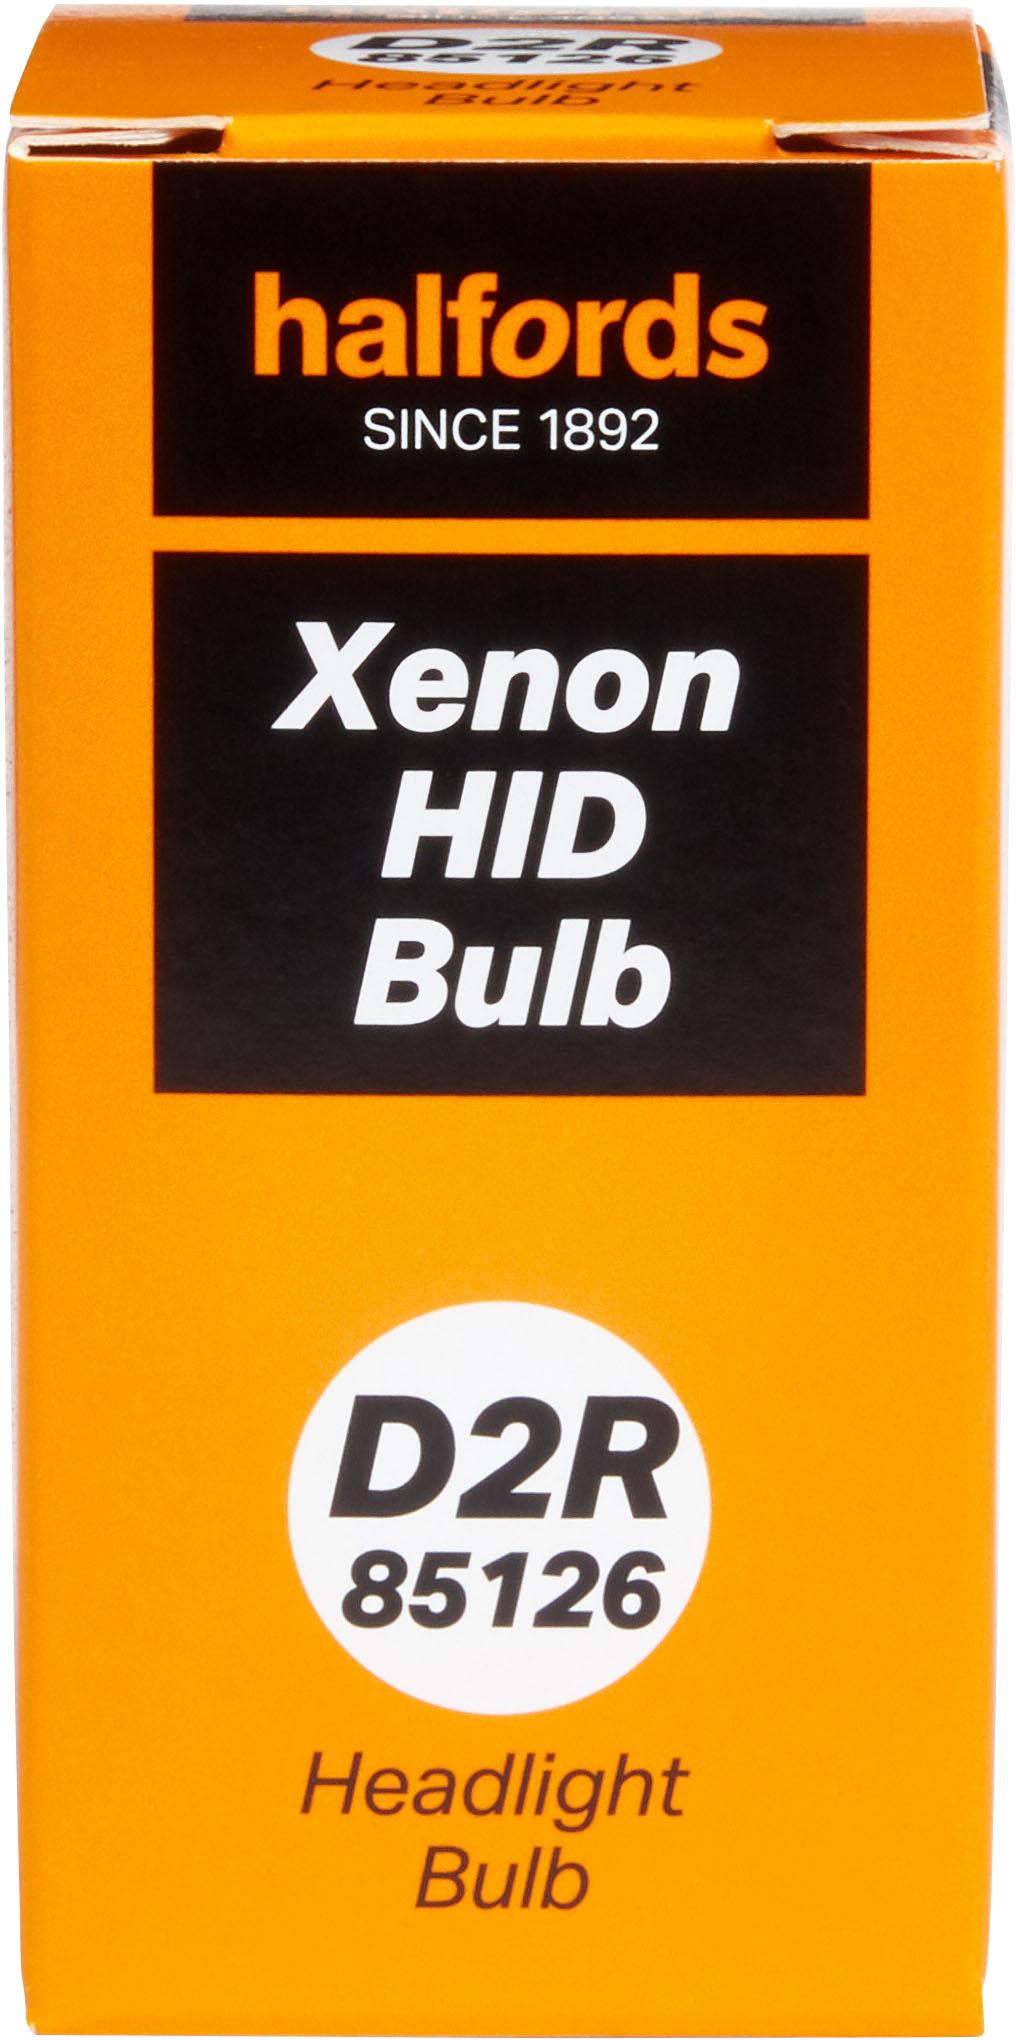 D2R 85126 Xenon Hid Car Headlight Bulb Manufacturers Standard Halfords Single Pack